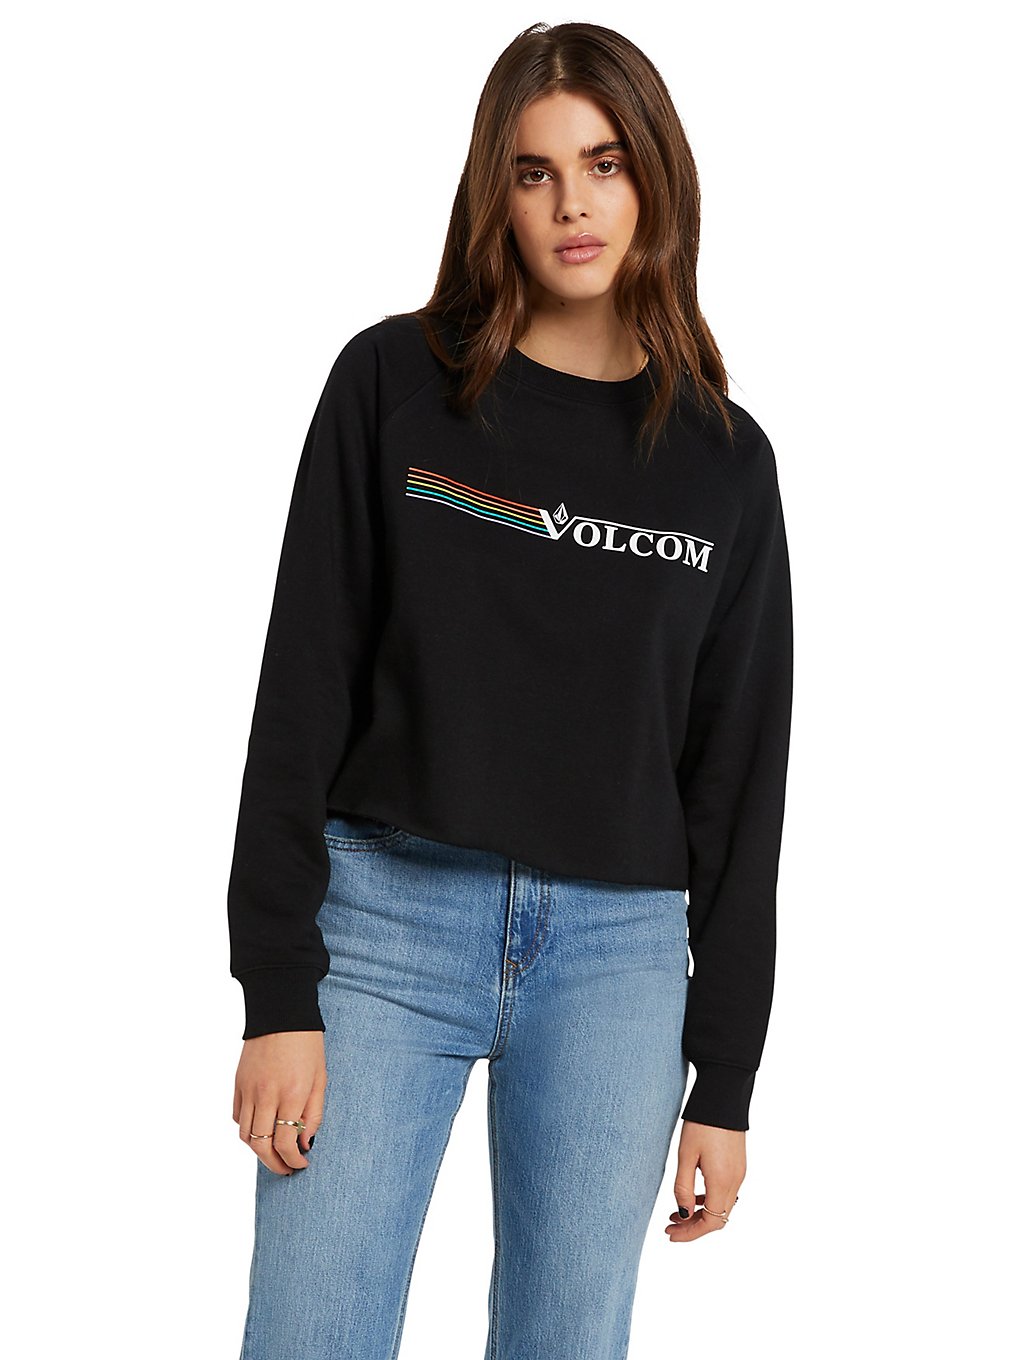 Volcom Truly Stoked Crew Sweater noir